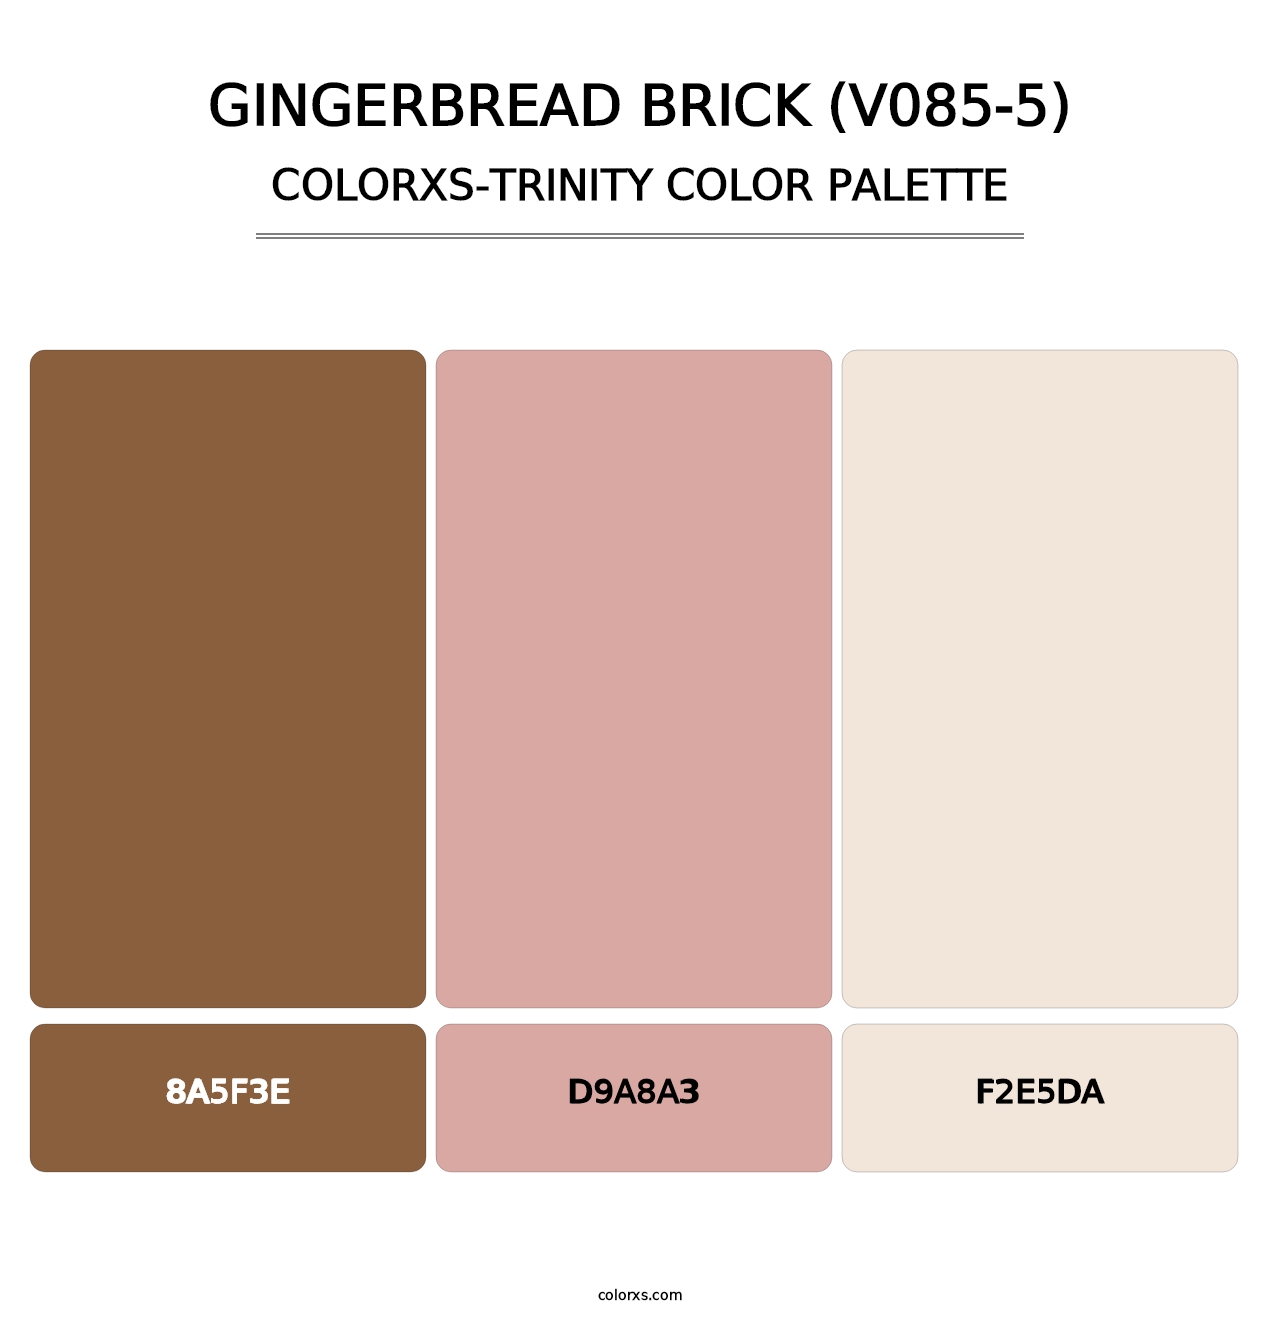 Gingerbread Brick (V085-5) - Colorxs Trinity Palette